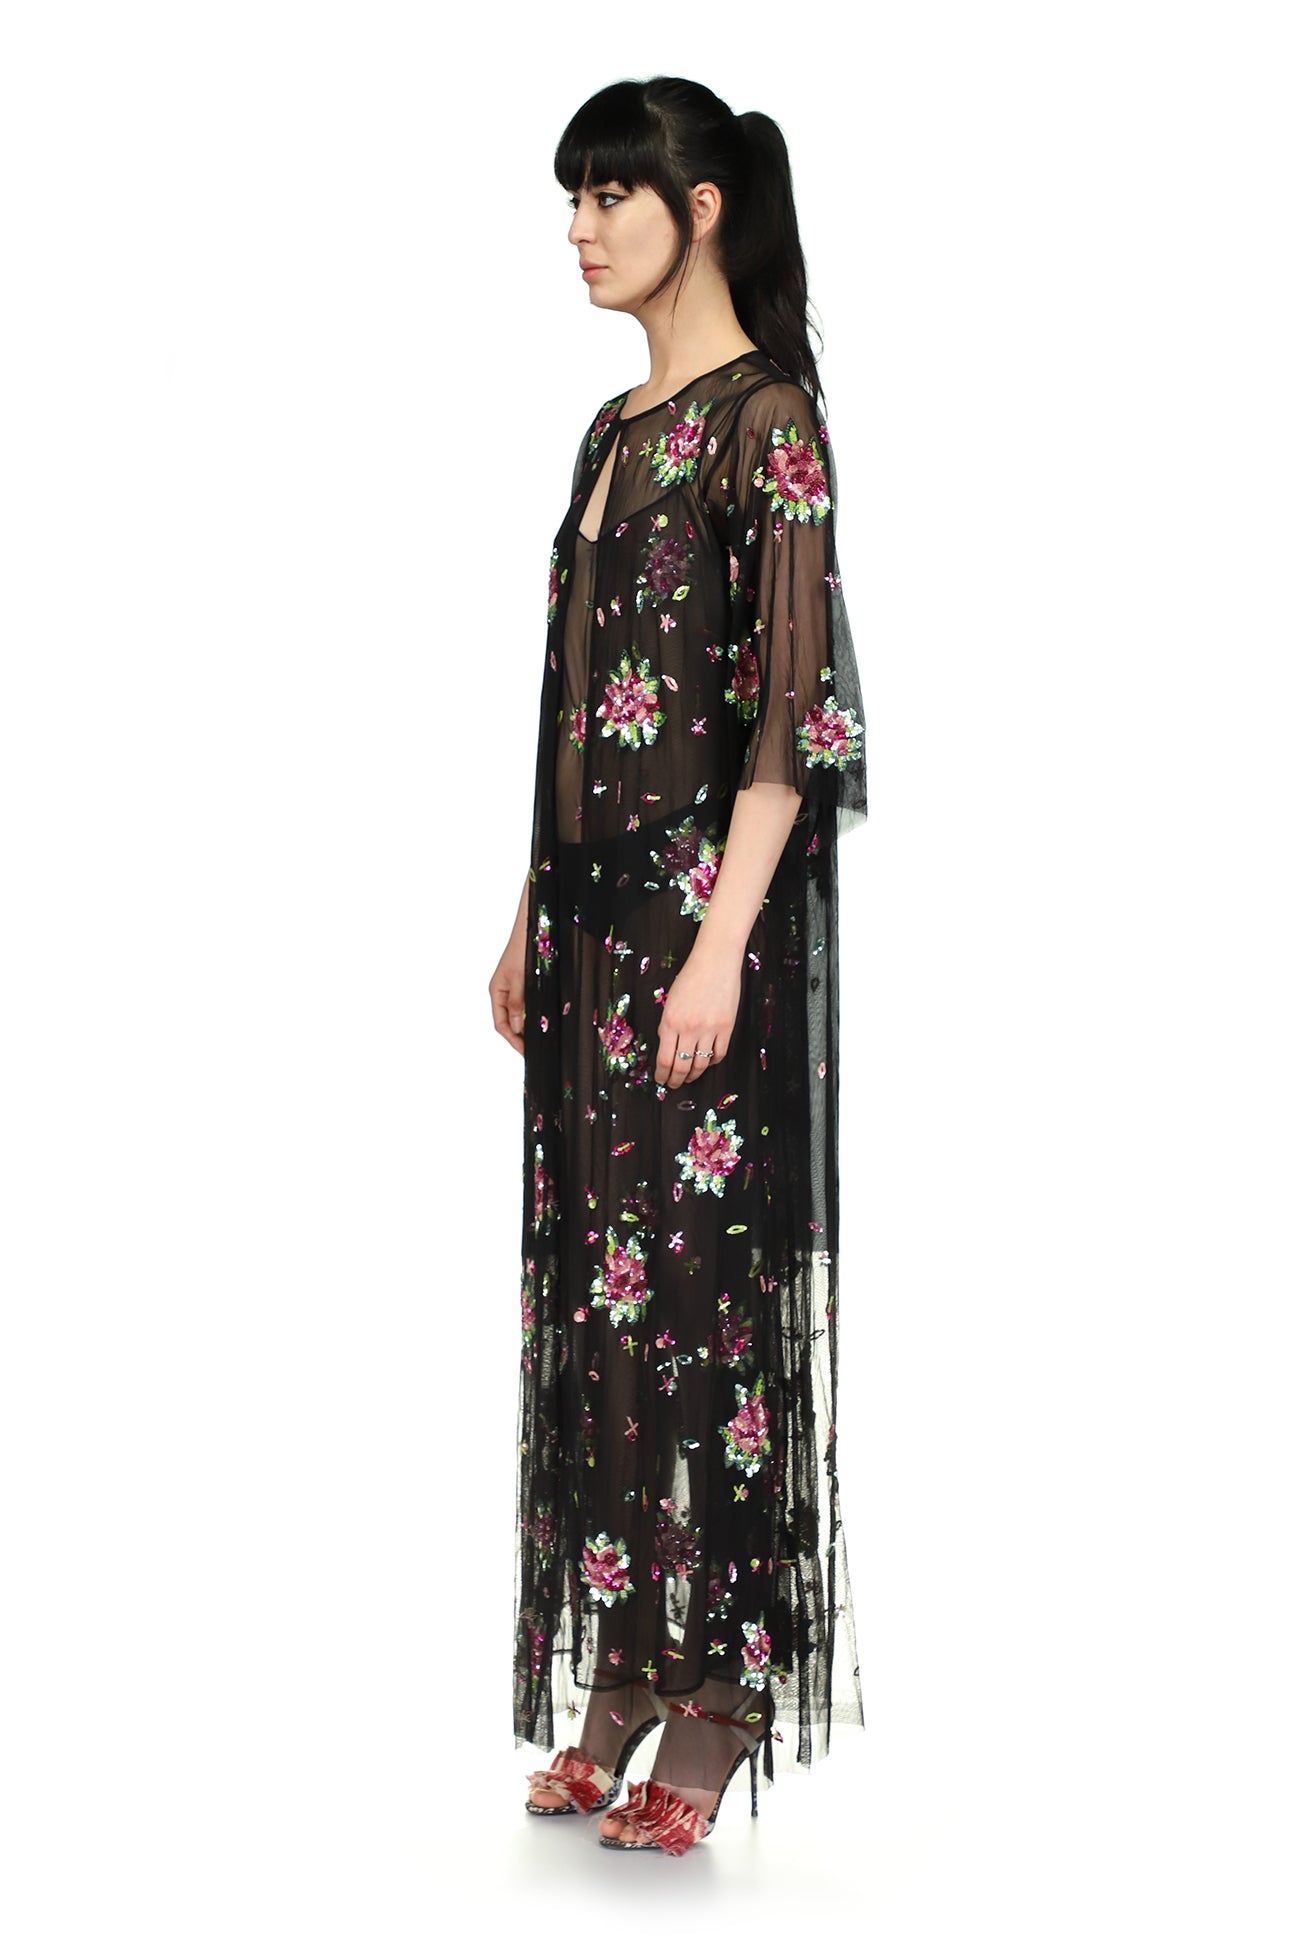 Tulle Floral Floor Length Robe - Women's Tops - Libertine